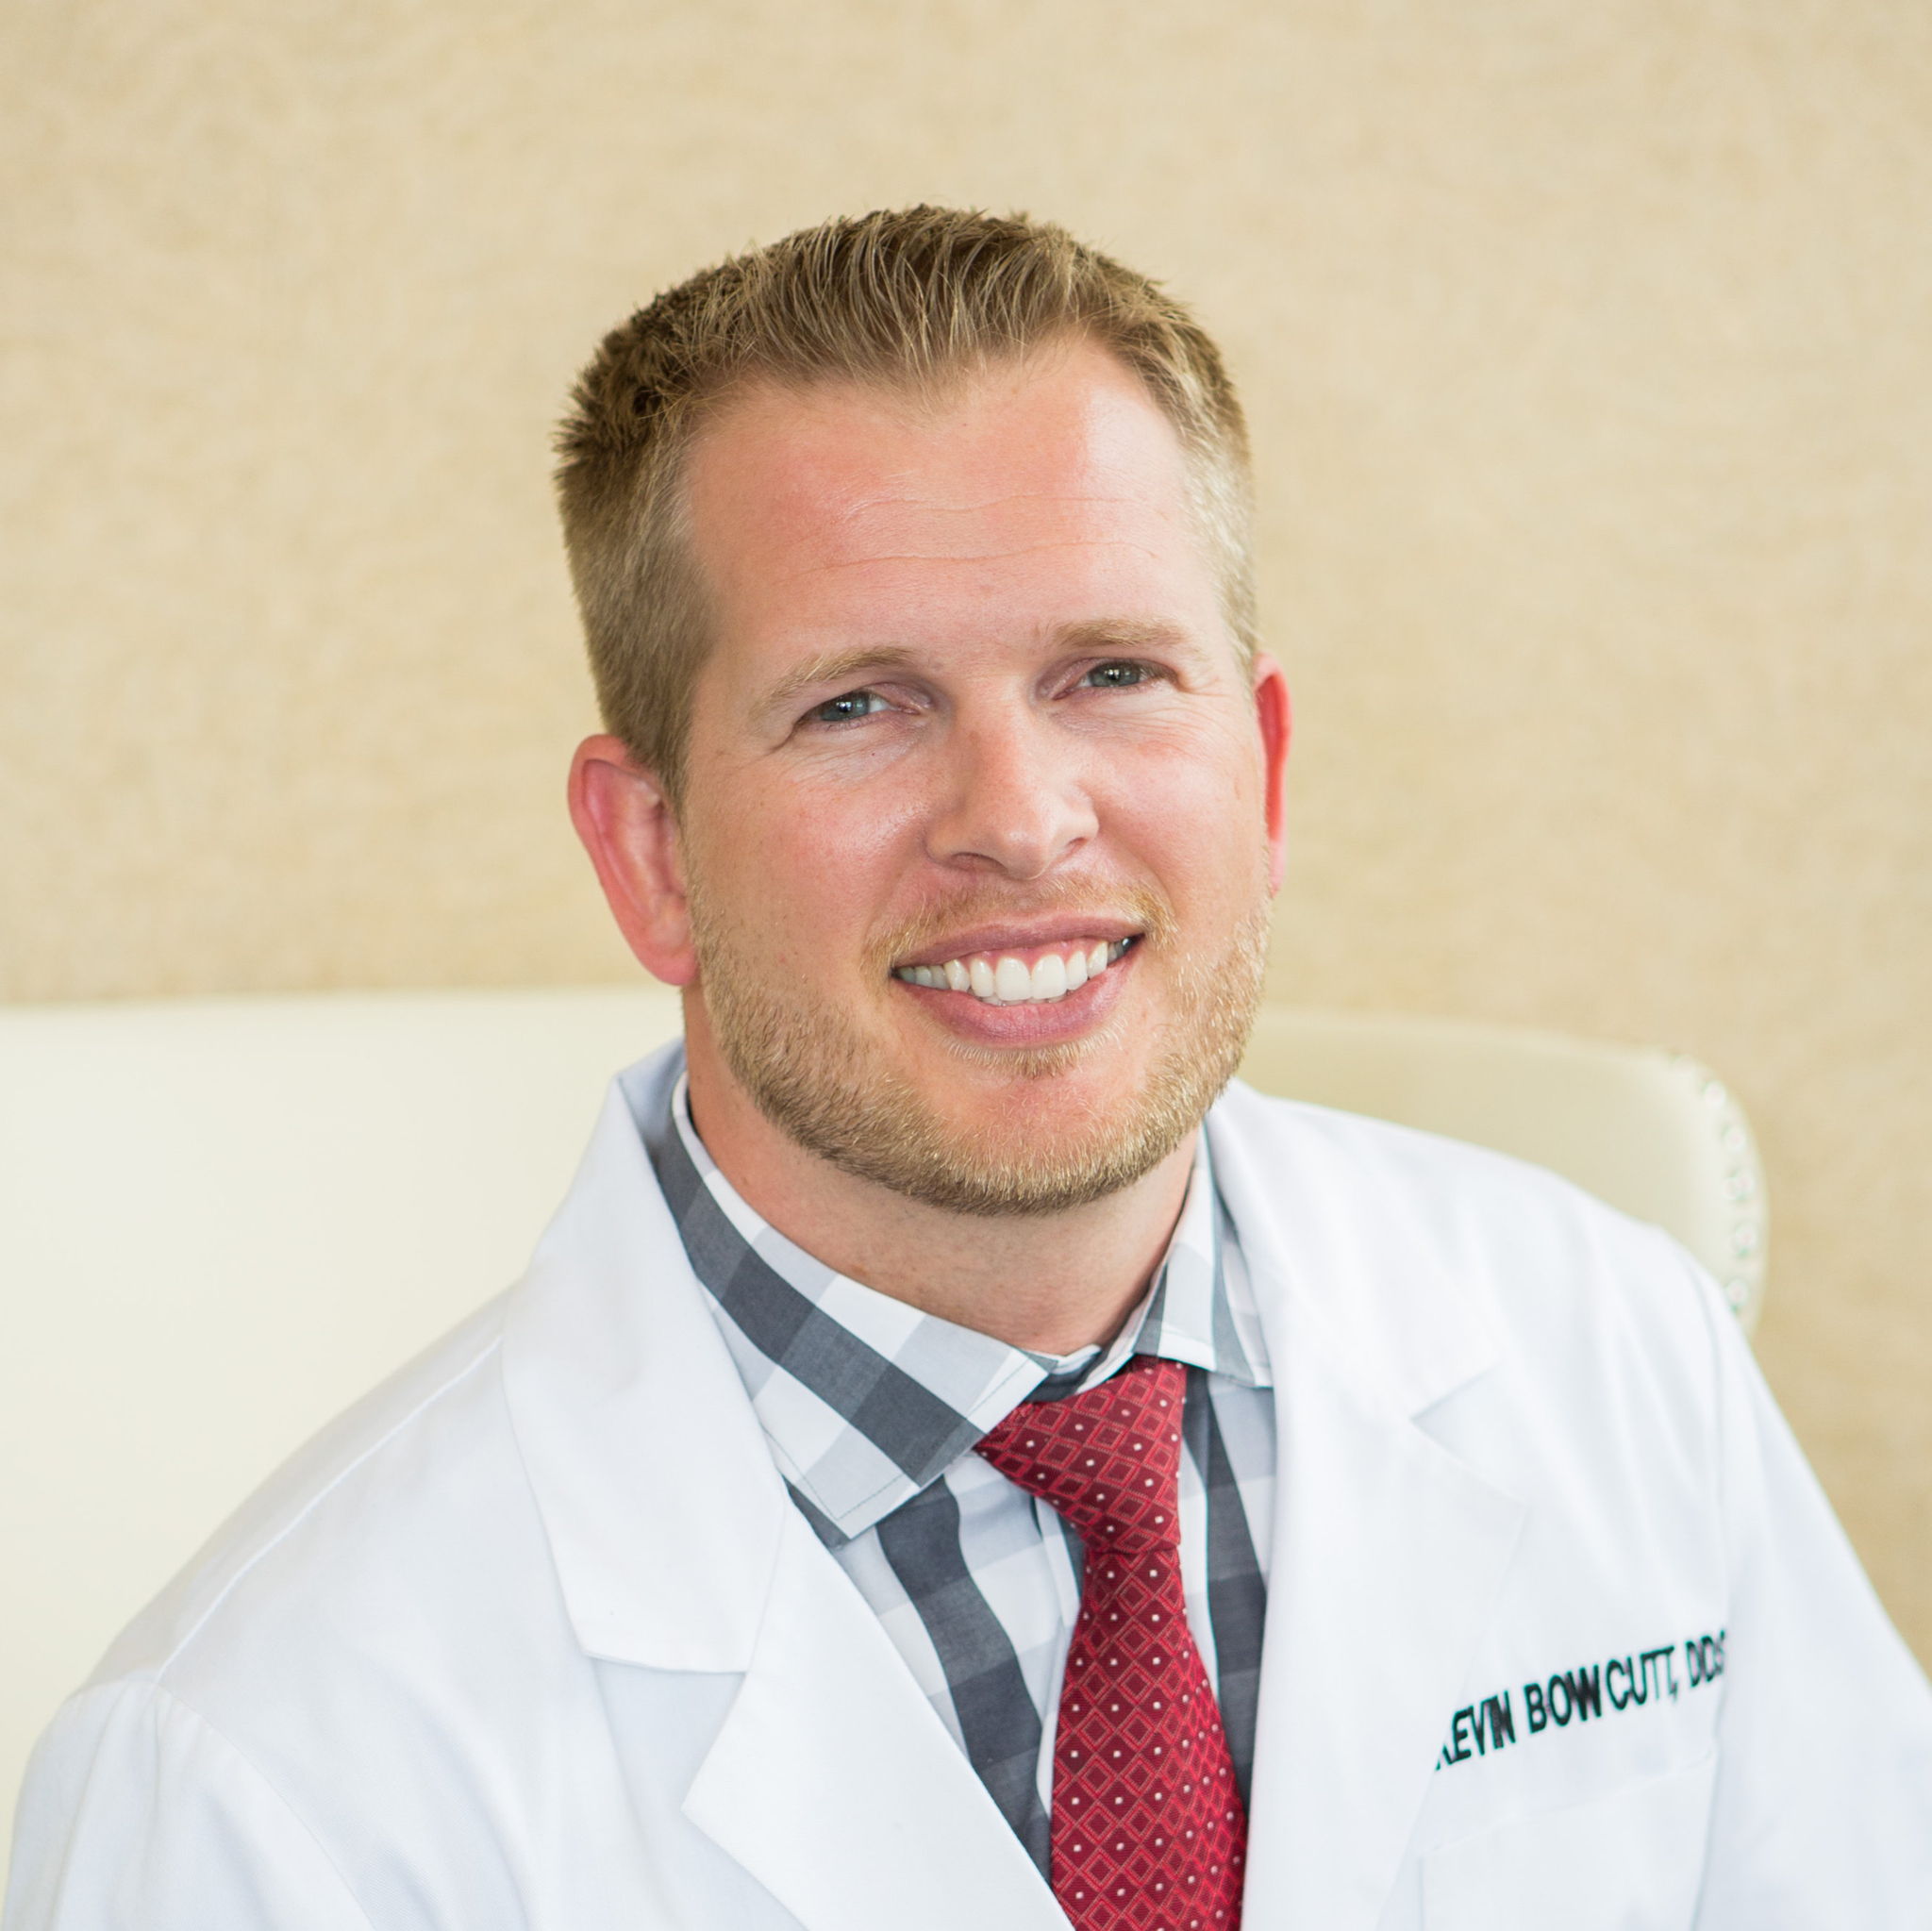 Dr. Kevin Bowcutt D.D.S., Dentist